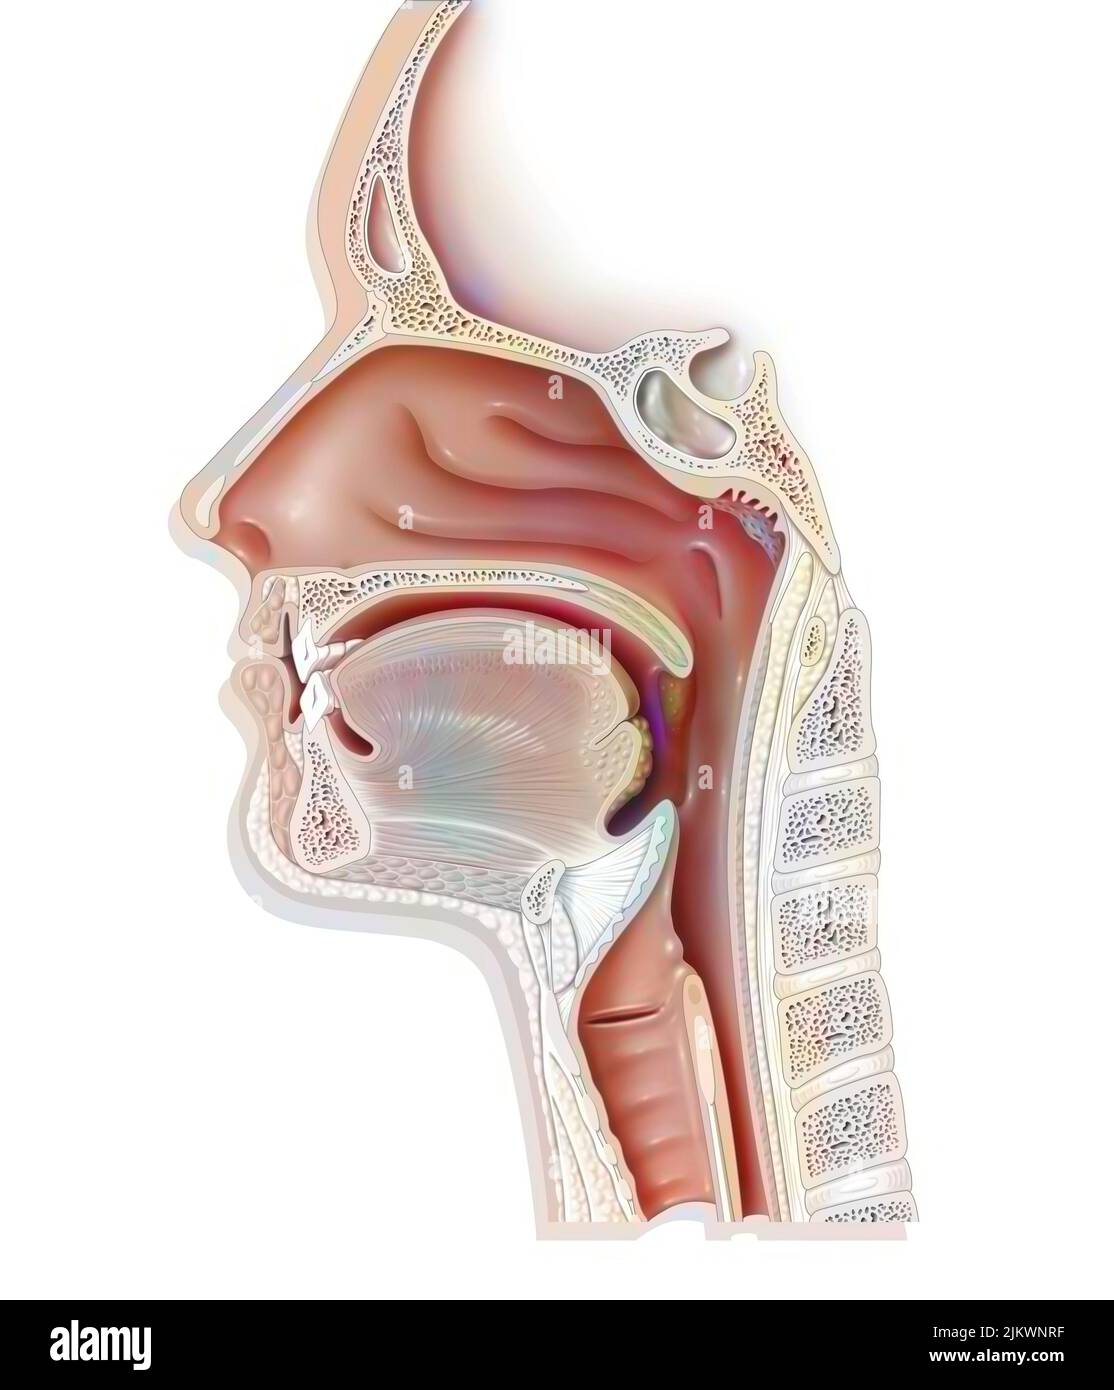 Vías respiratorias superiores que muestran la laringe, epiglotis. Foto de stock